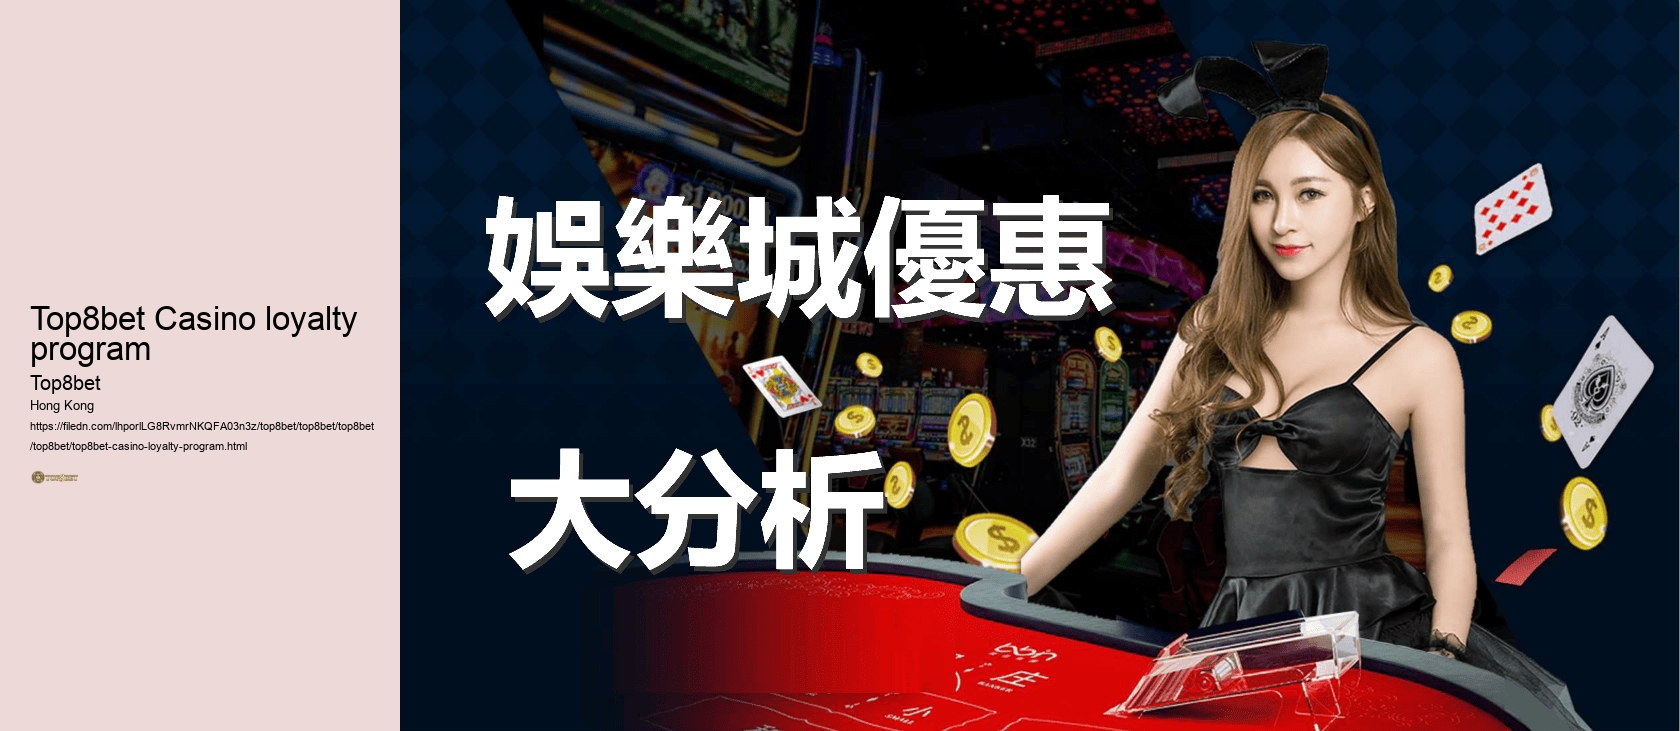 Top8bet Casino loyalty program